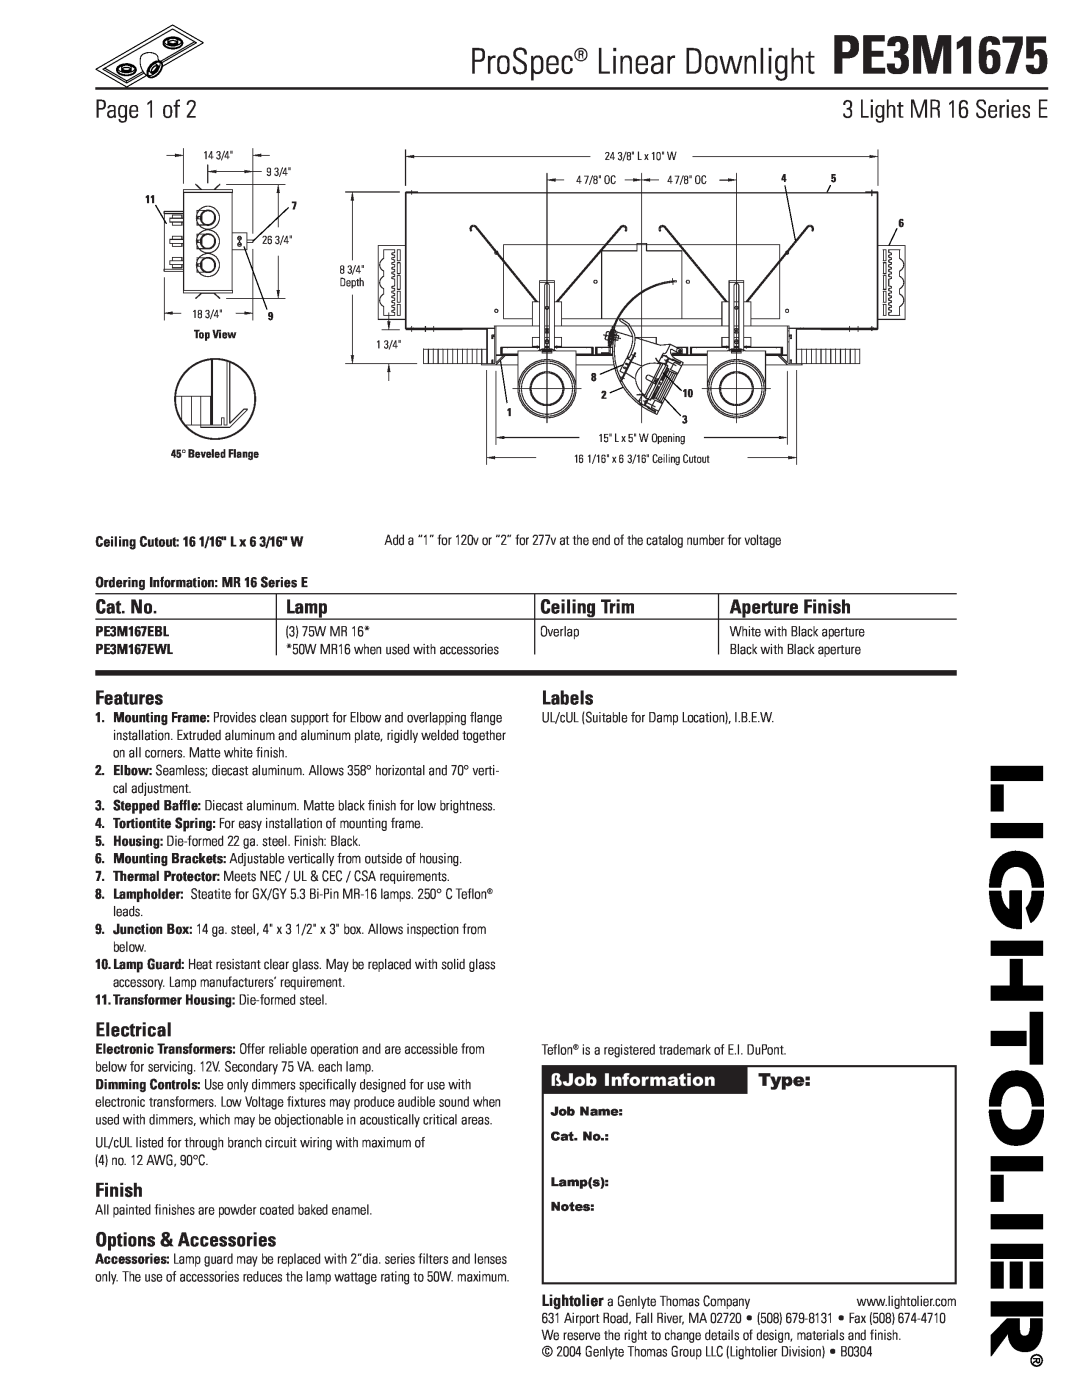 Lightolier manual ProSpec Linear Downlight PE3M1675, Page 1 of, Light MR 16 Series E, ßJob Information, Type, Overlap 